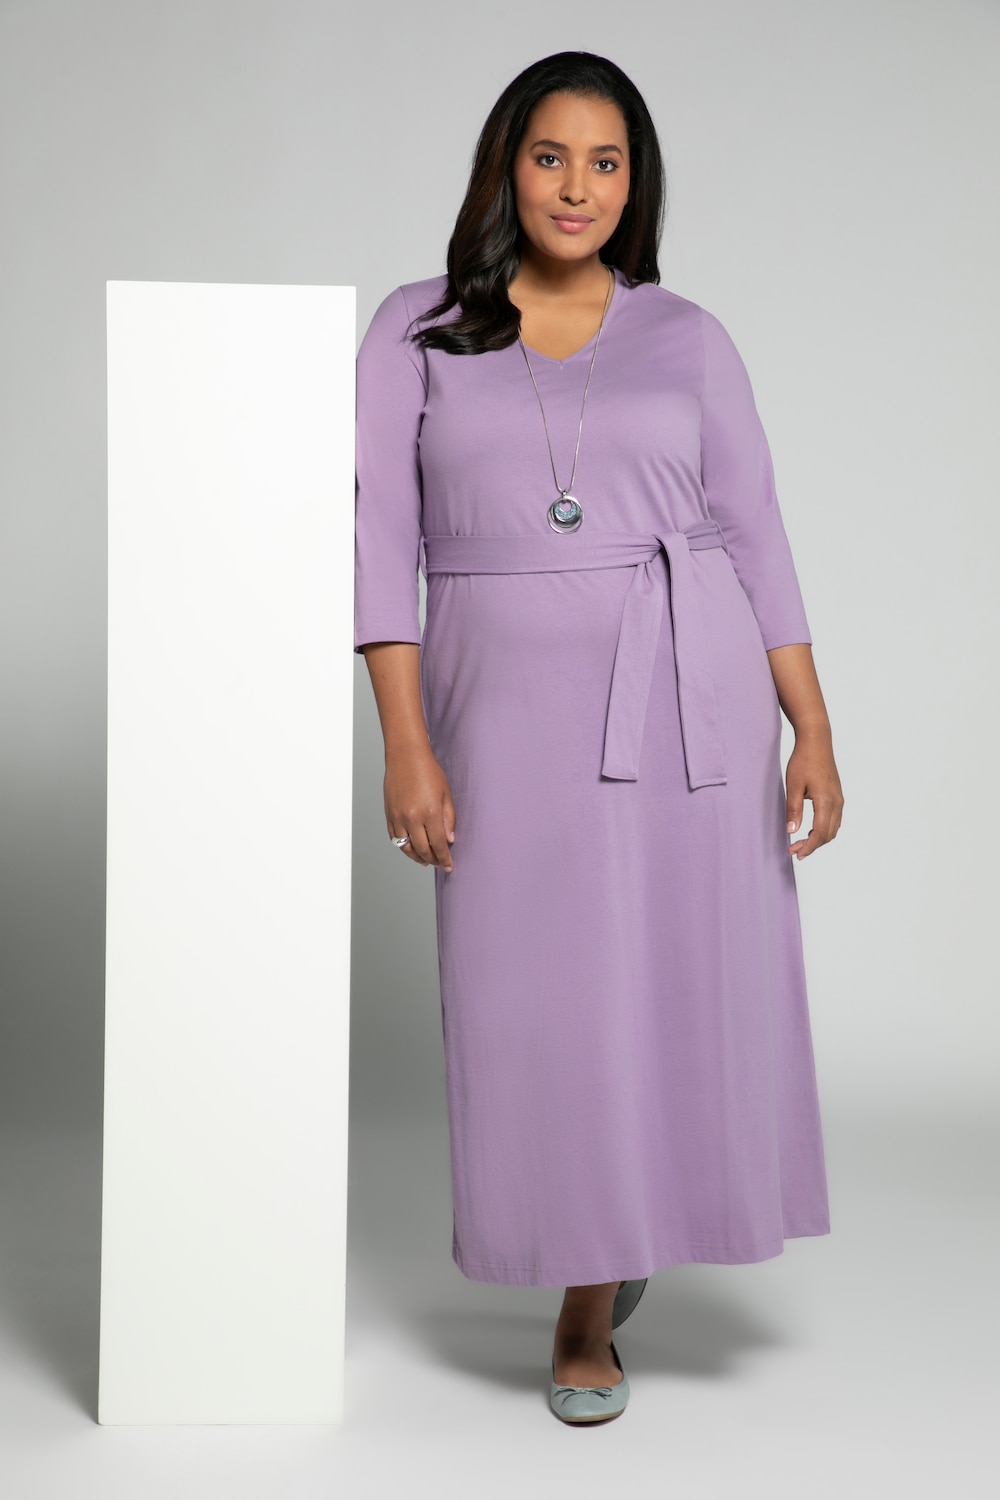 Plus Size Sash V-Neck Cotton Knit Pocket Dress, Woman, purple, size: 20/22, cotton, Ulla Popken